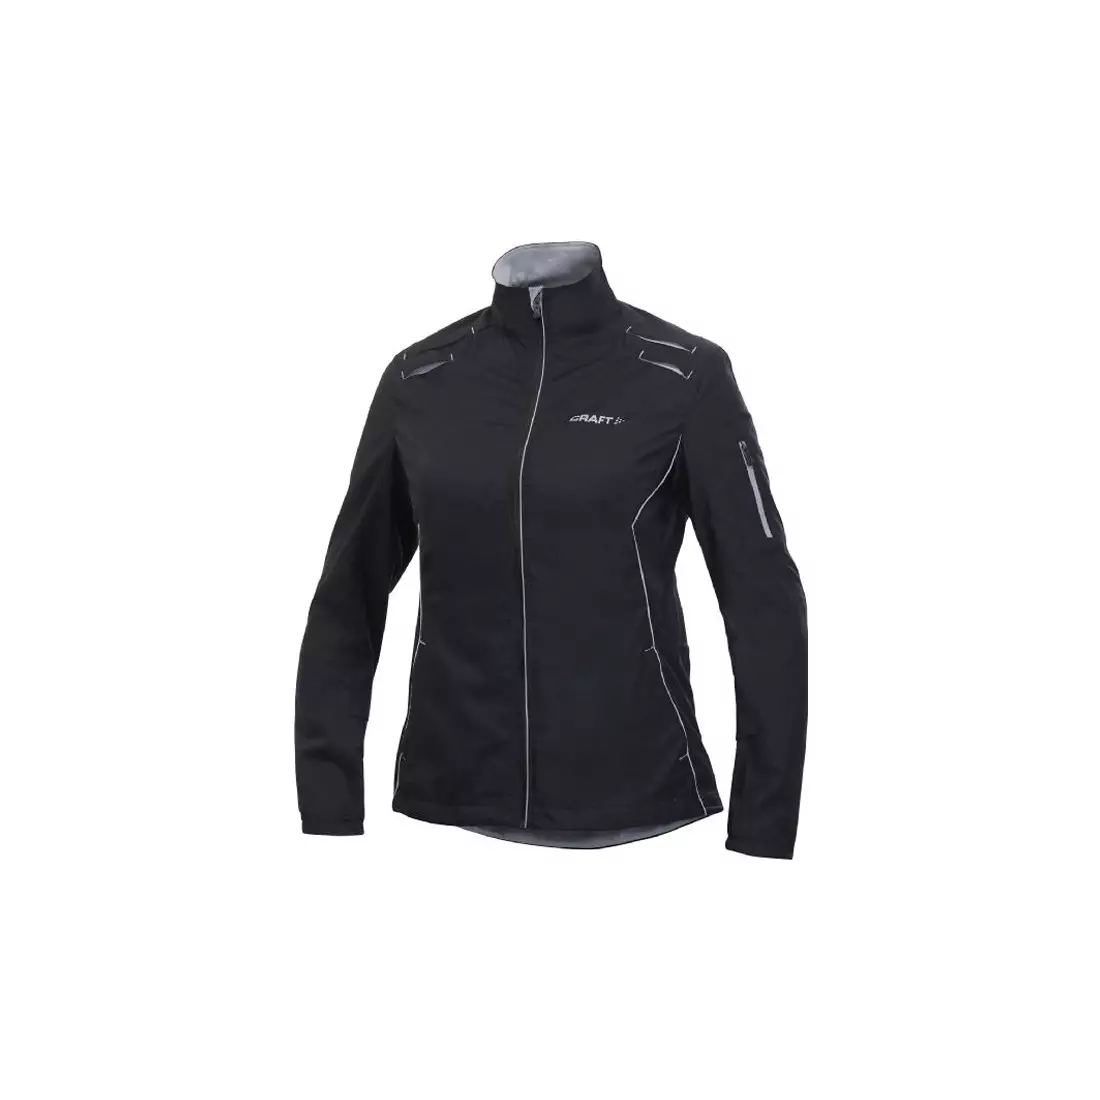 CRAFT PERFORMANCE - women's running jacket 194161-2999